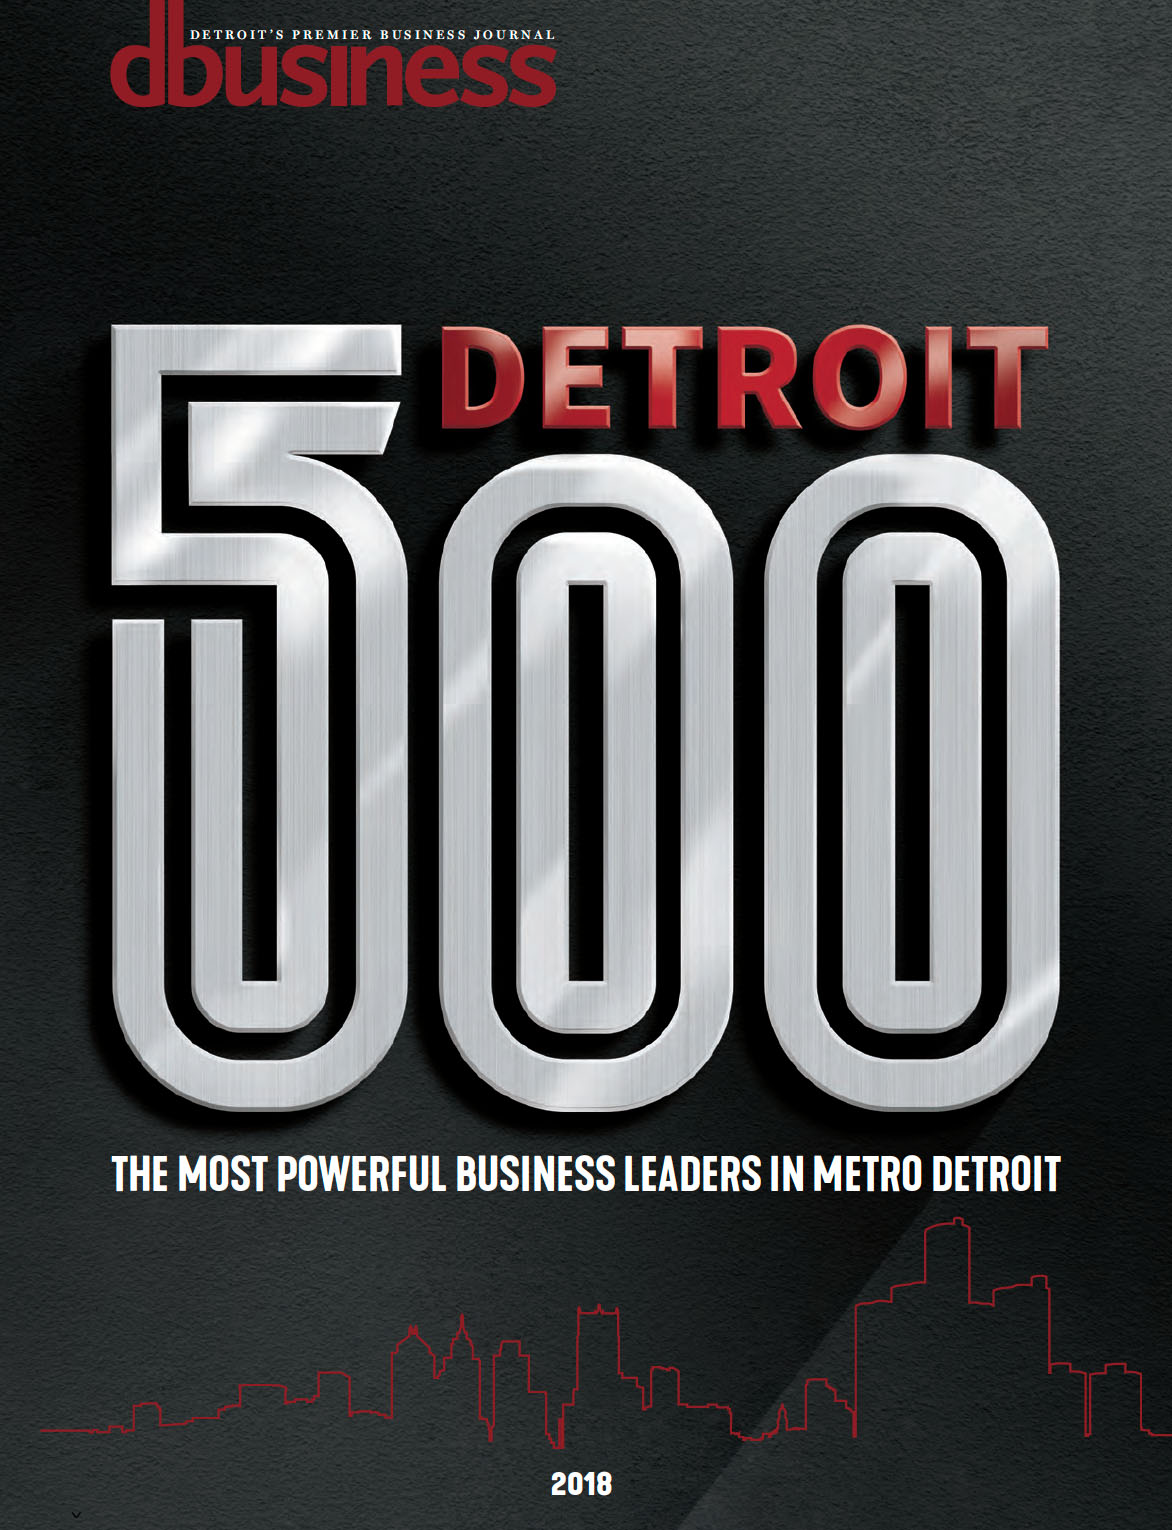 Skip Simms makes the Detroit 500 List